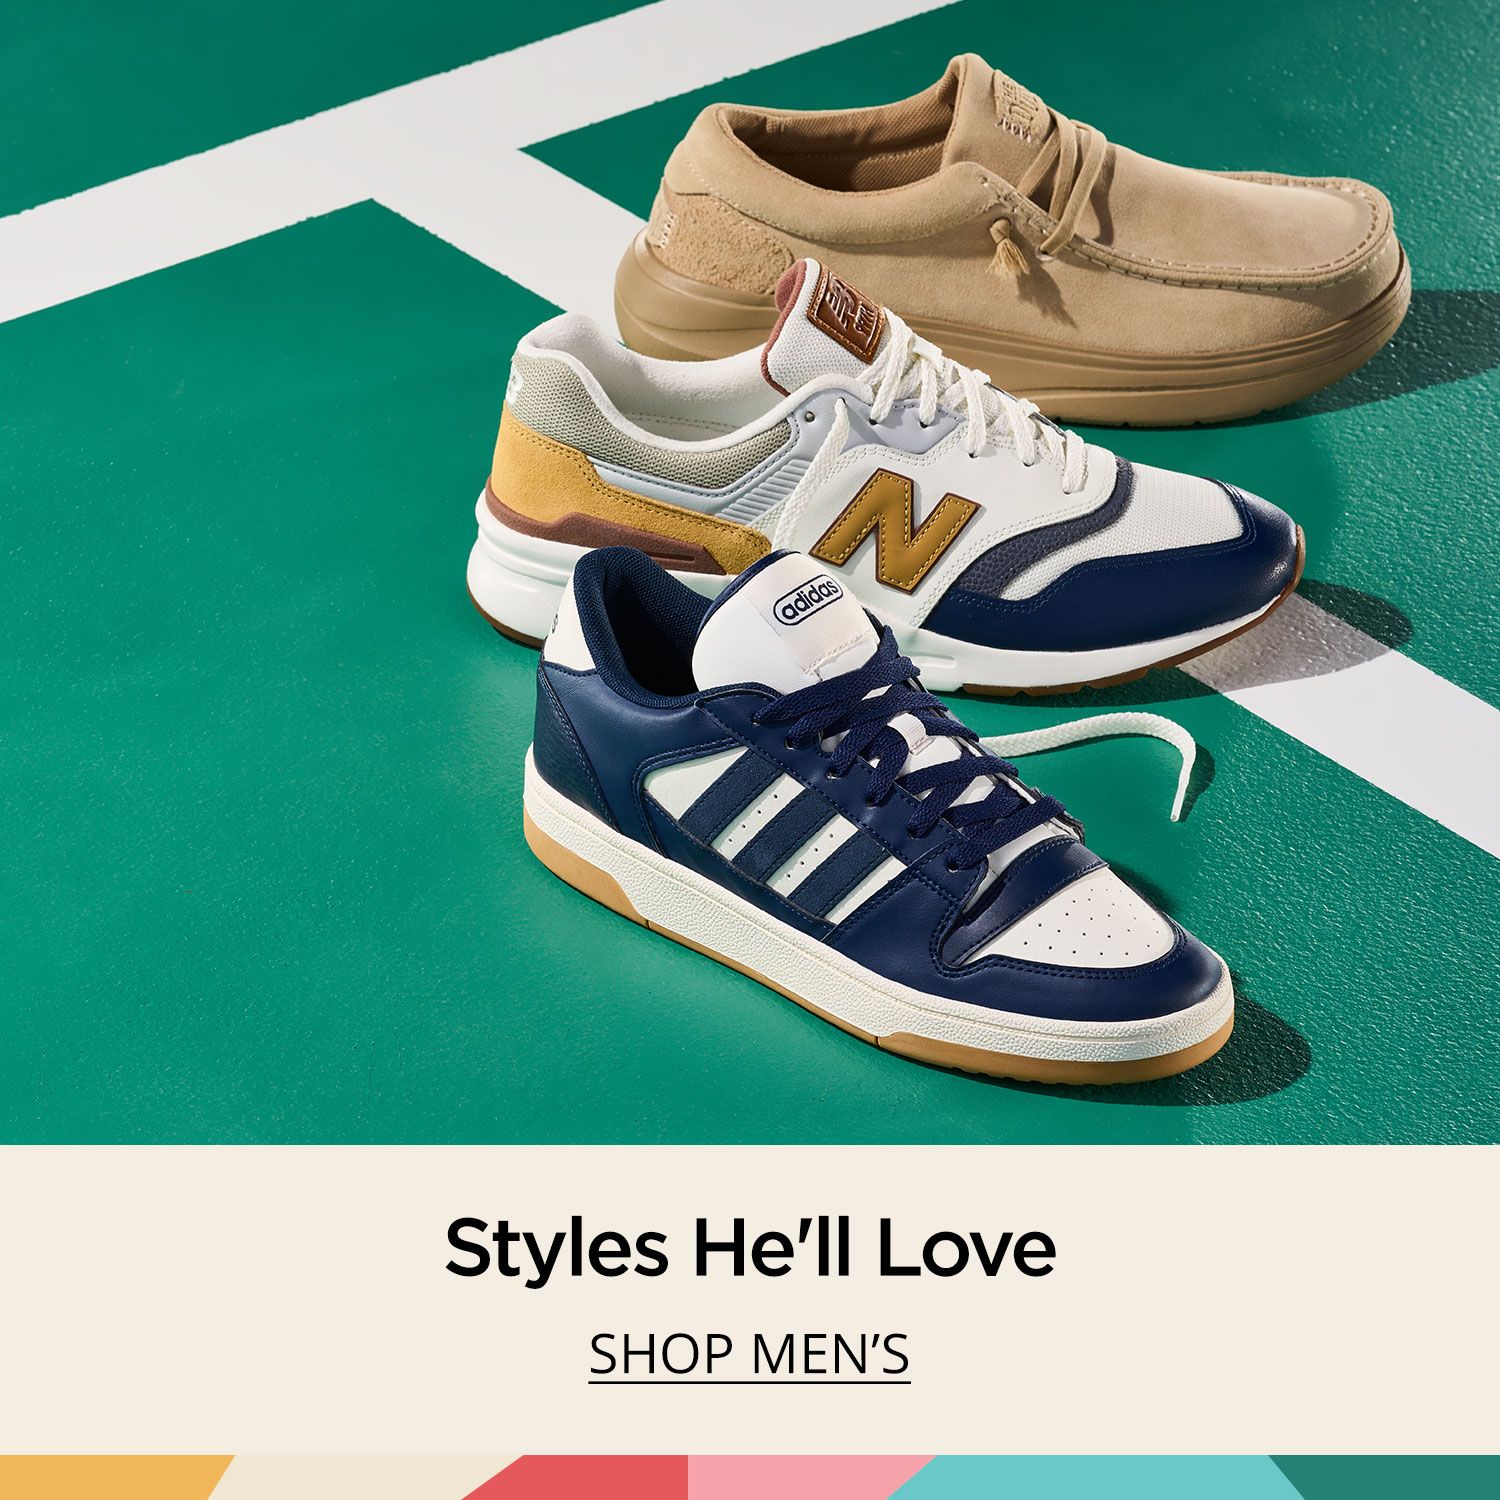 adidas Breakstart Men's Sneaker, New Balance 997H Men's Sneaker, Heydude Wally Comf Men's Slip On Sneaker